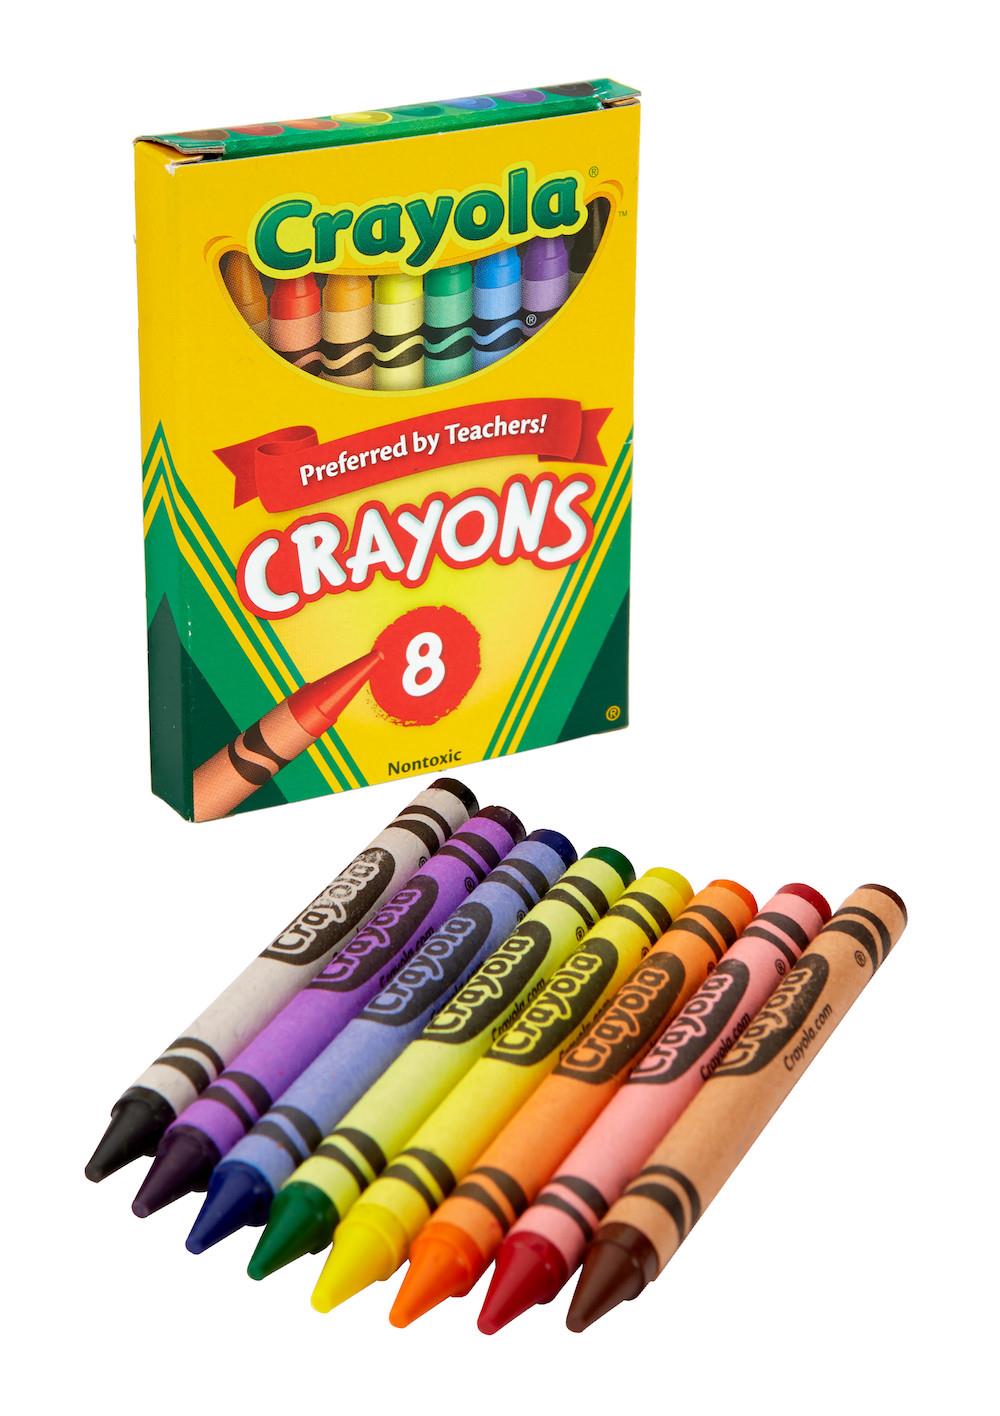 Crayola, Product categories